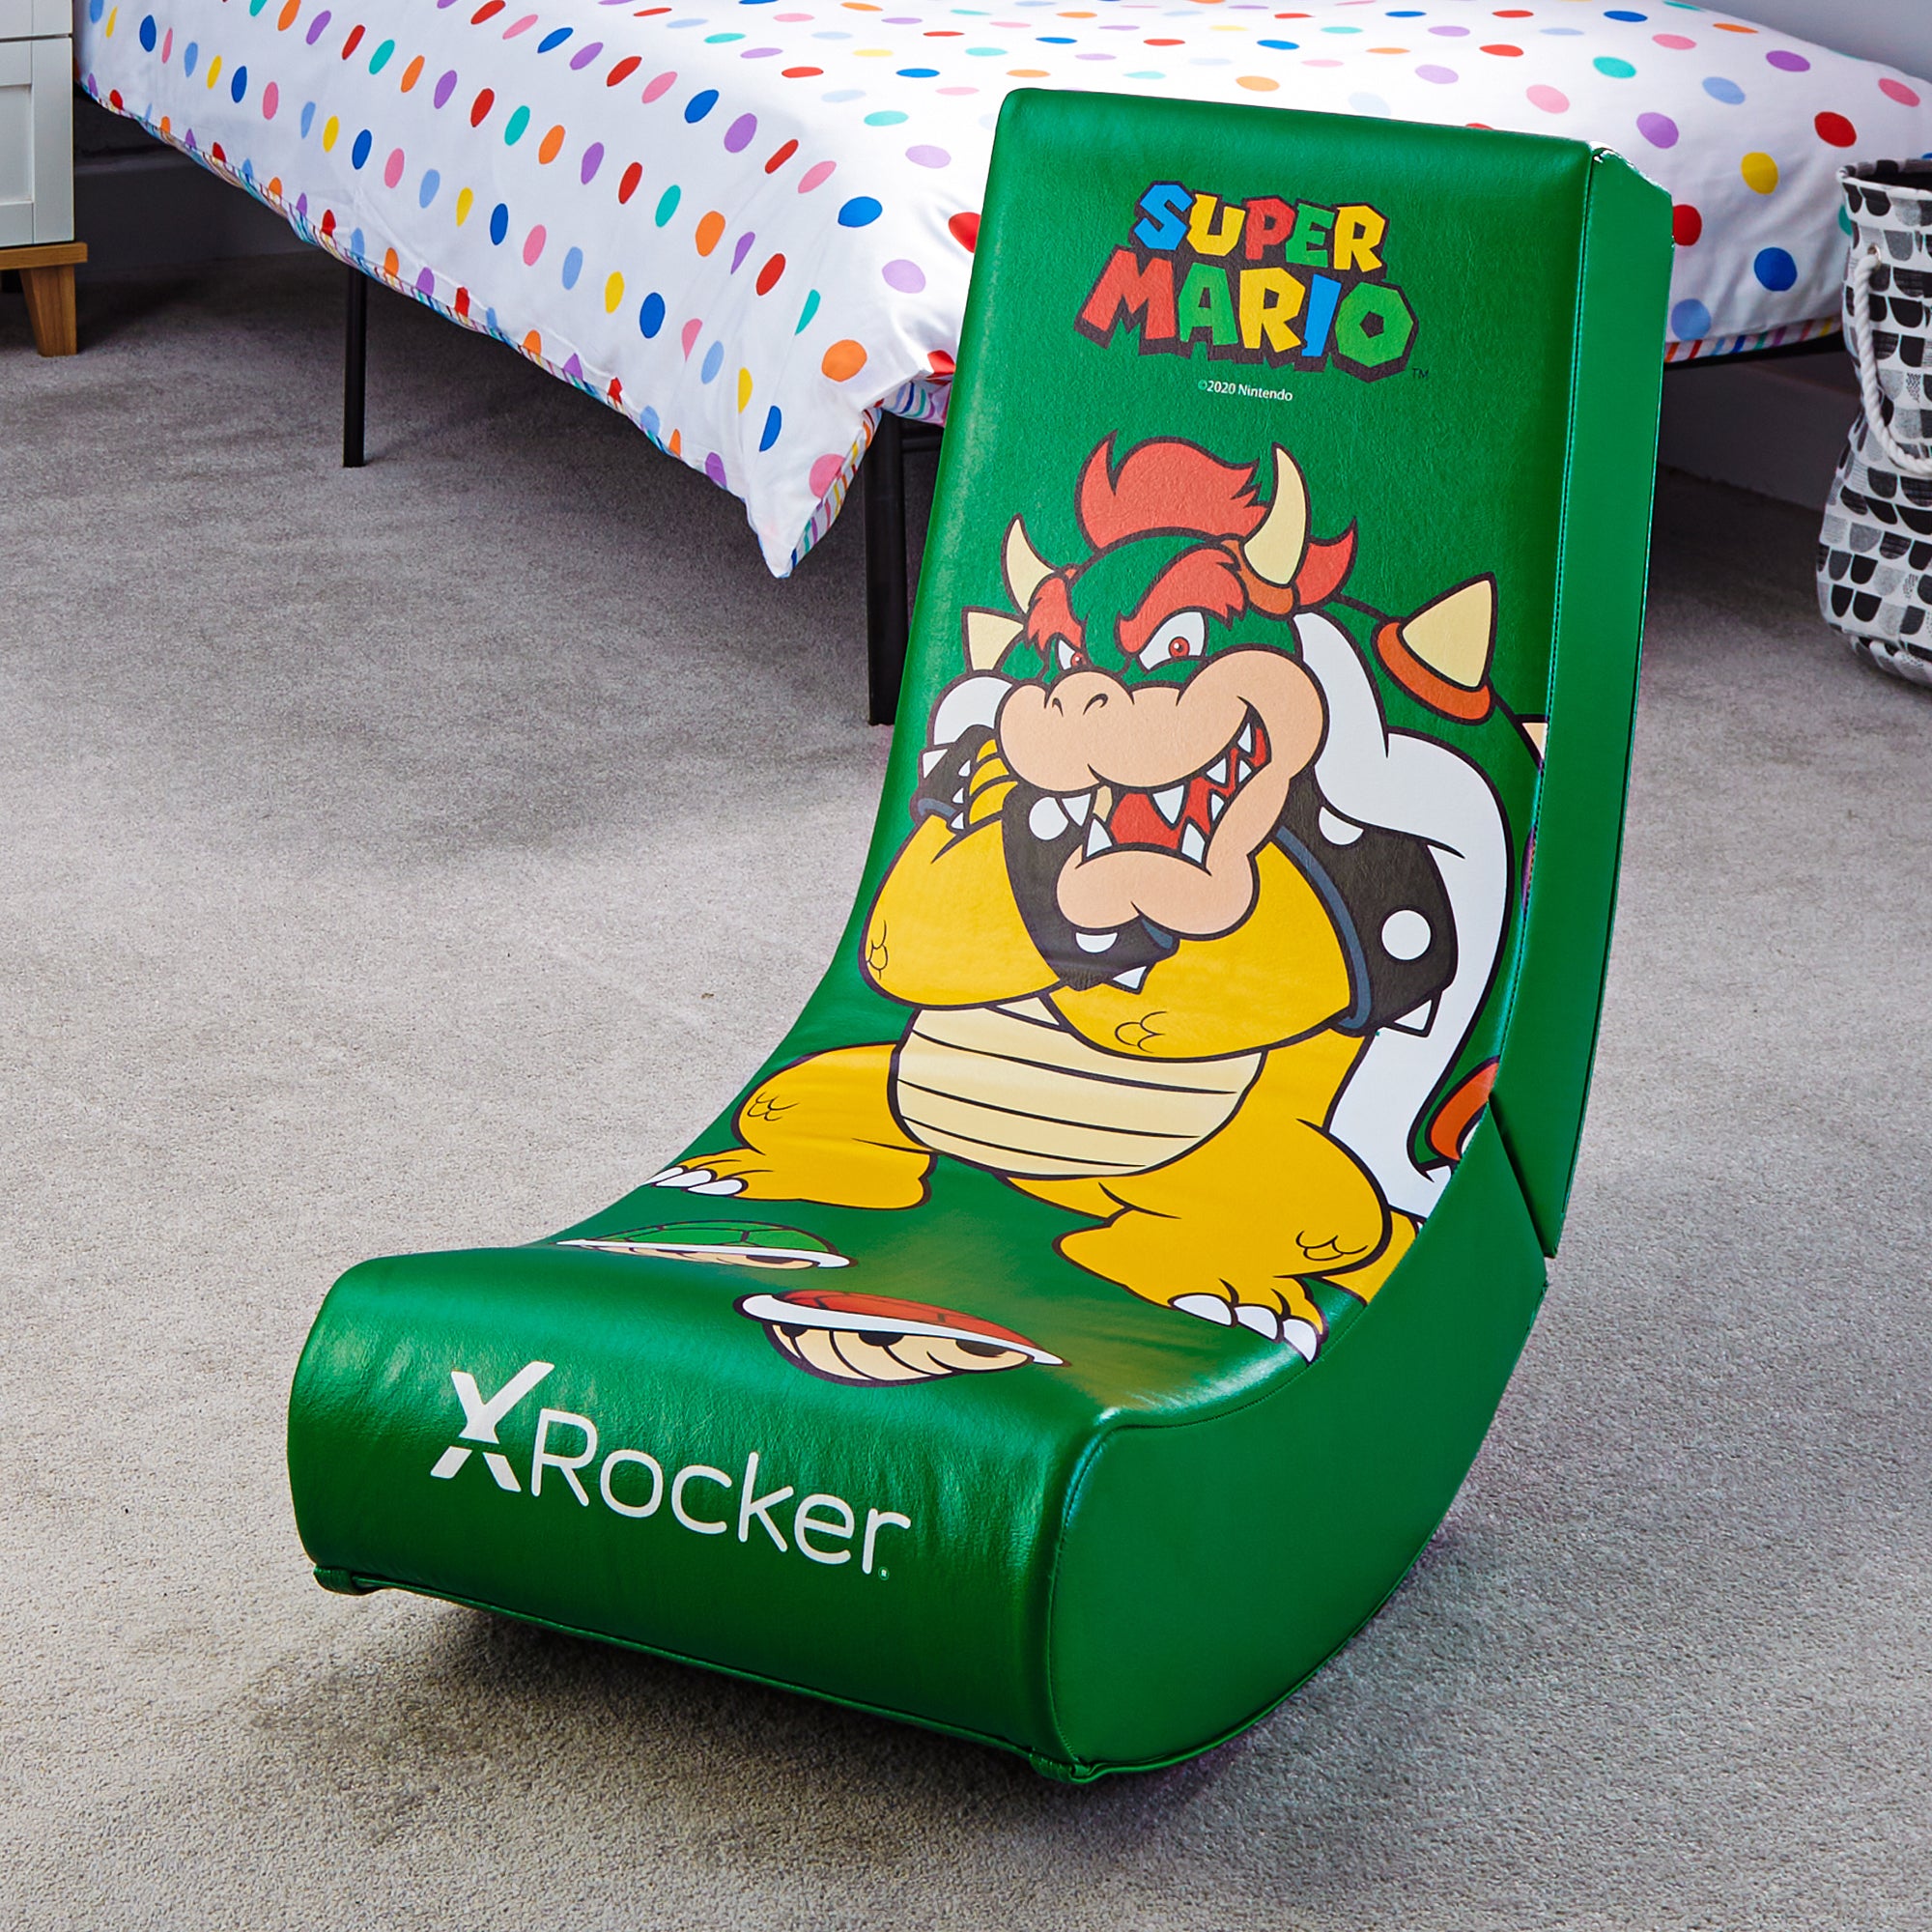 X Rocker Super Mario Floor Rocker - Bowser